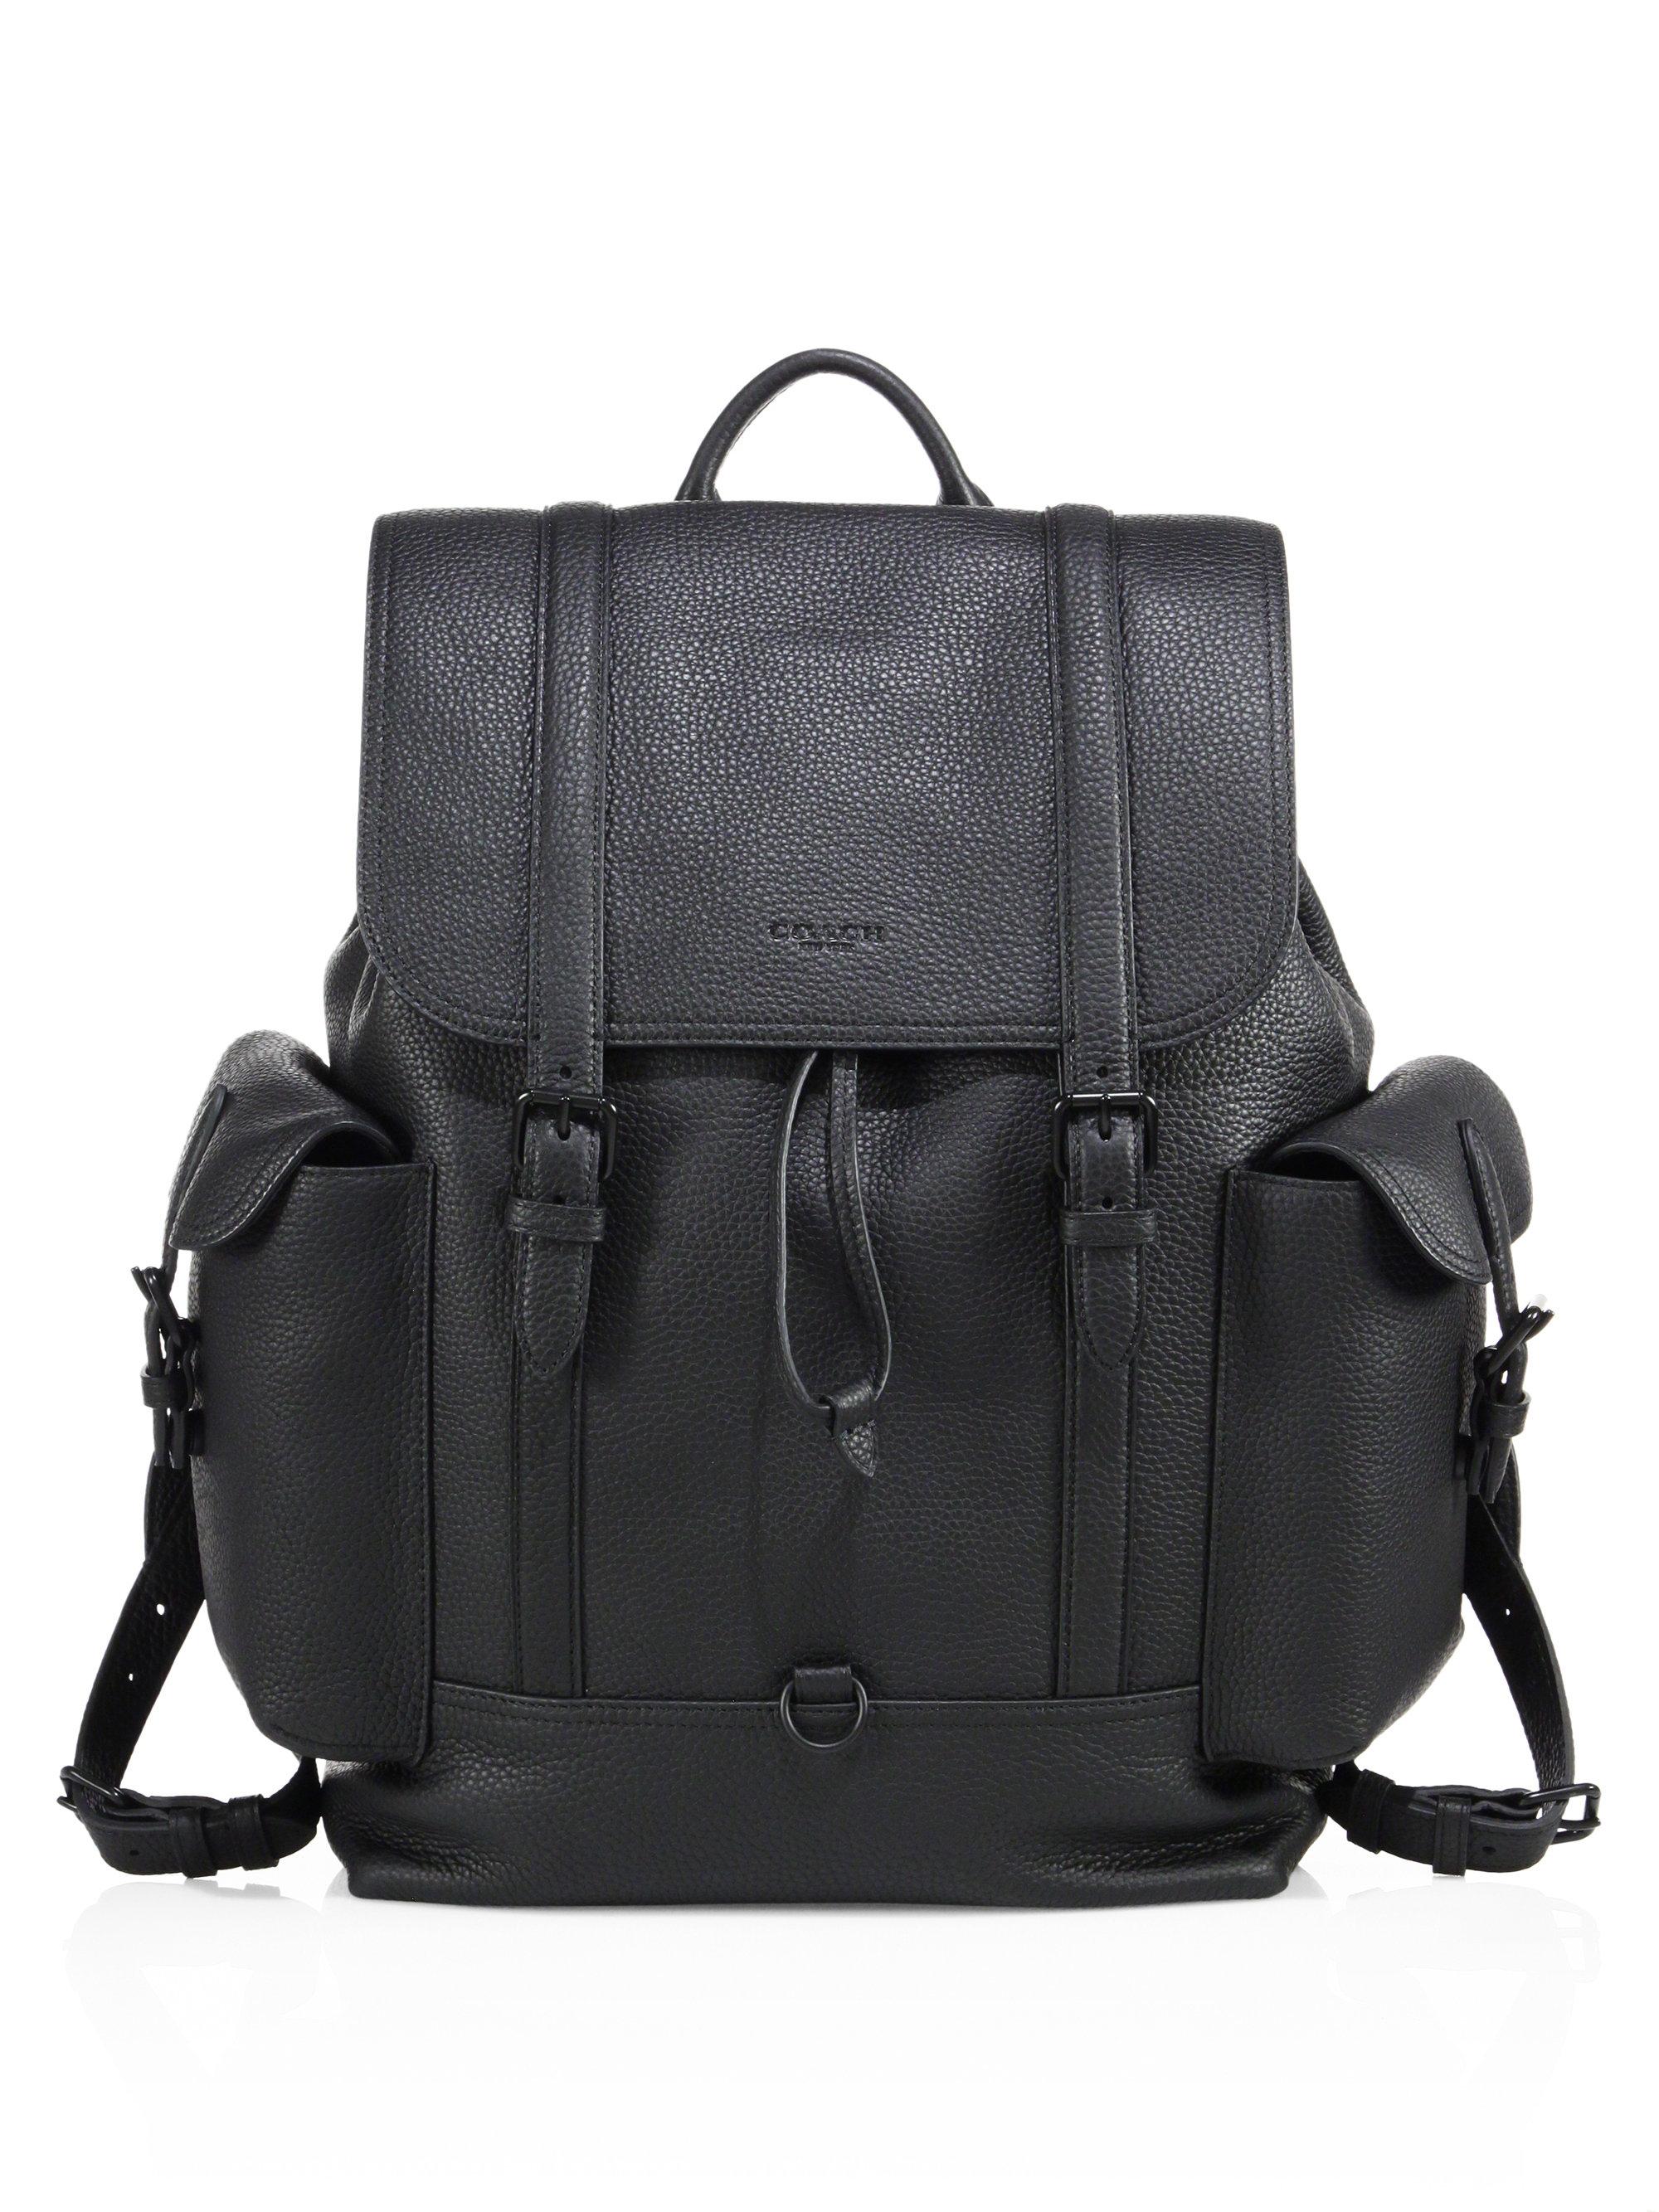 COACH Metropolitan Rucksack Pebble Leather Backpack in Black for Men - Lyst